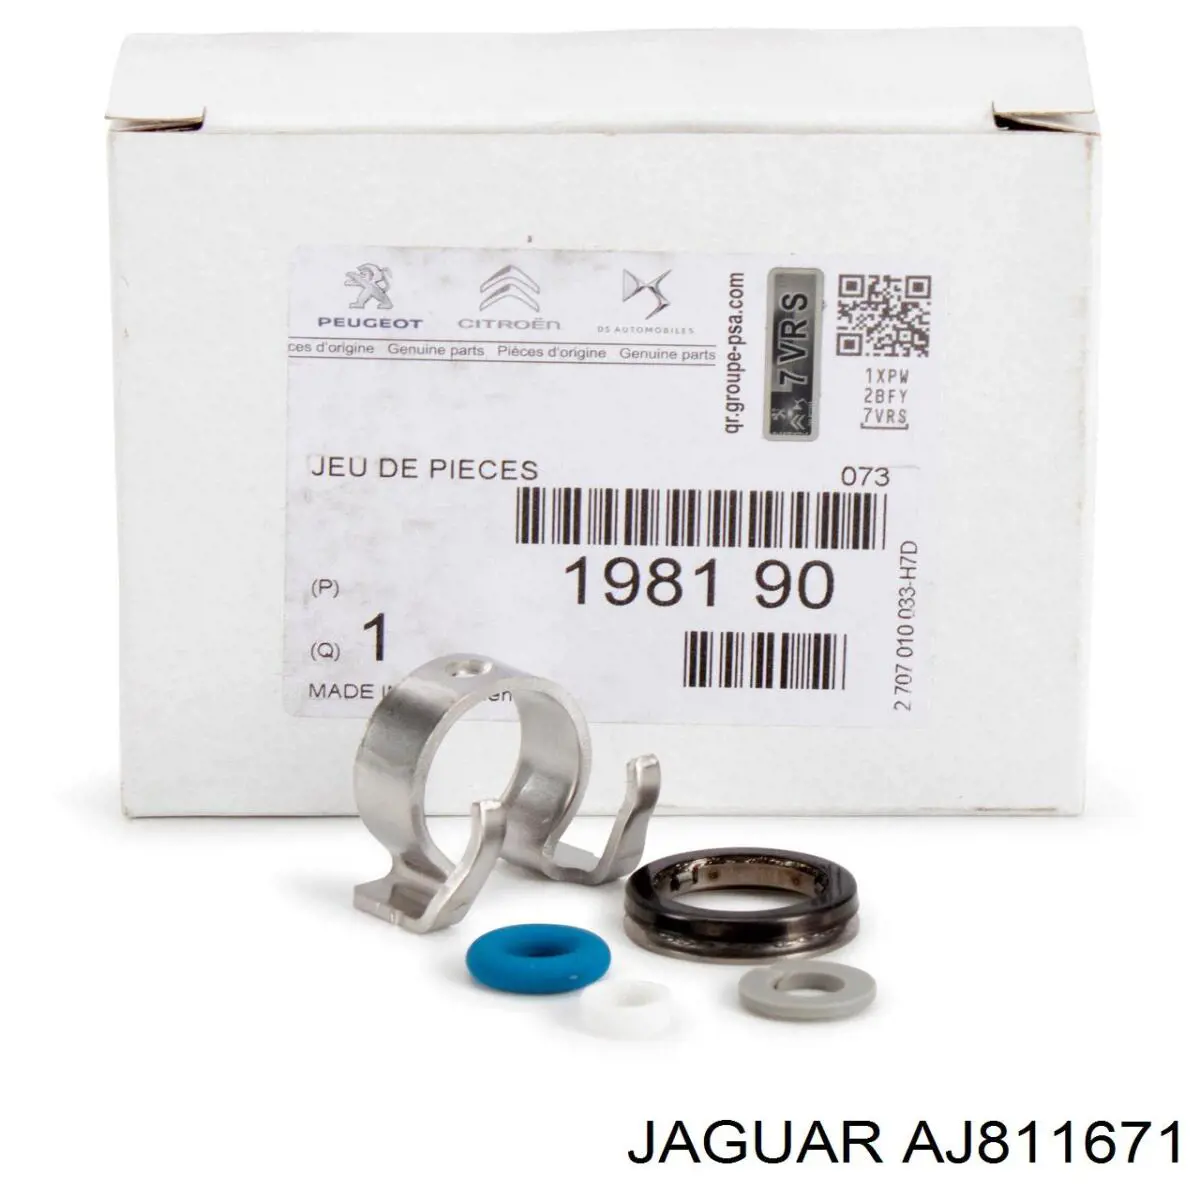 AJ811671 Jaguar ремкомплект форсунки